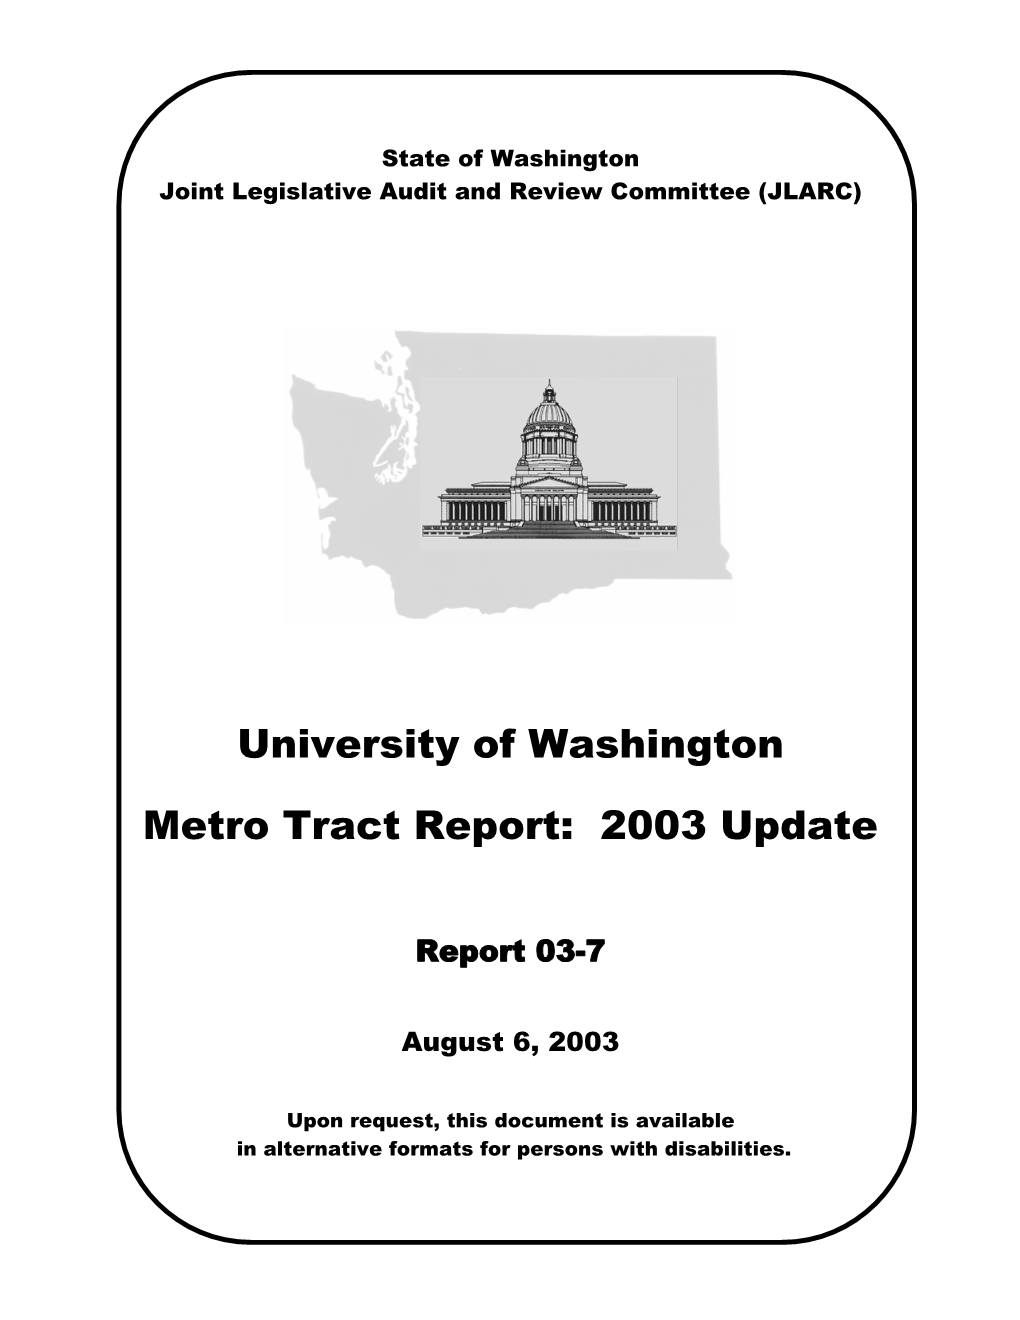 University of Washington Metro Tract Report: 2003 Update